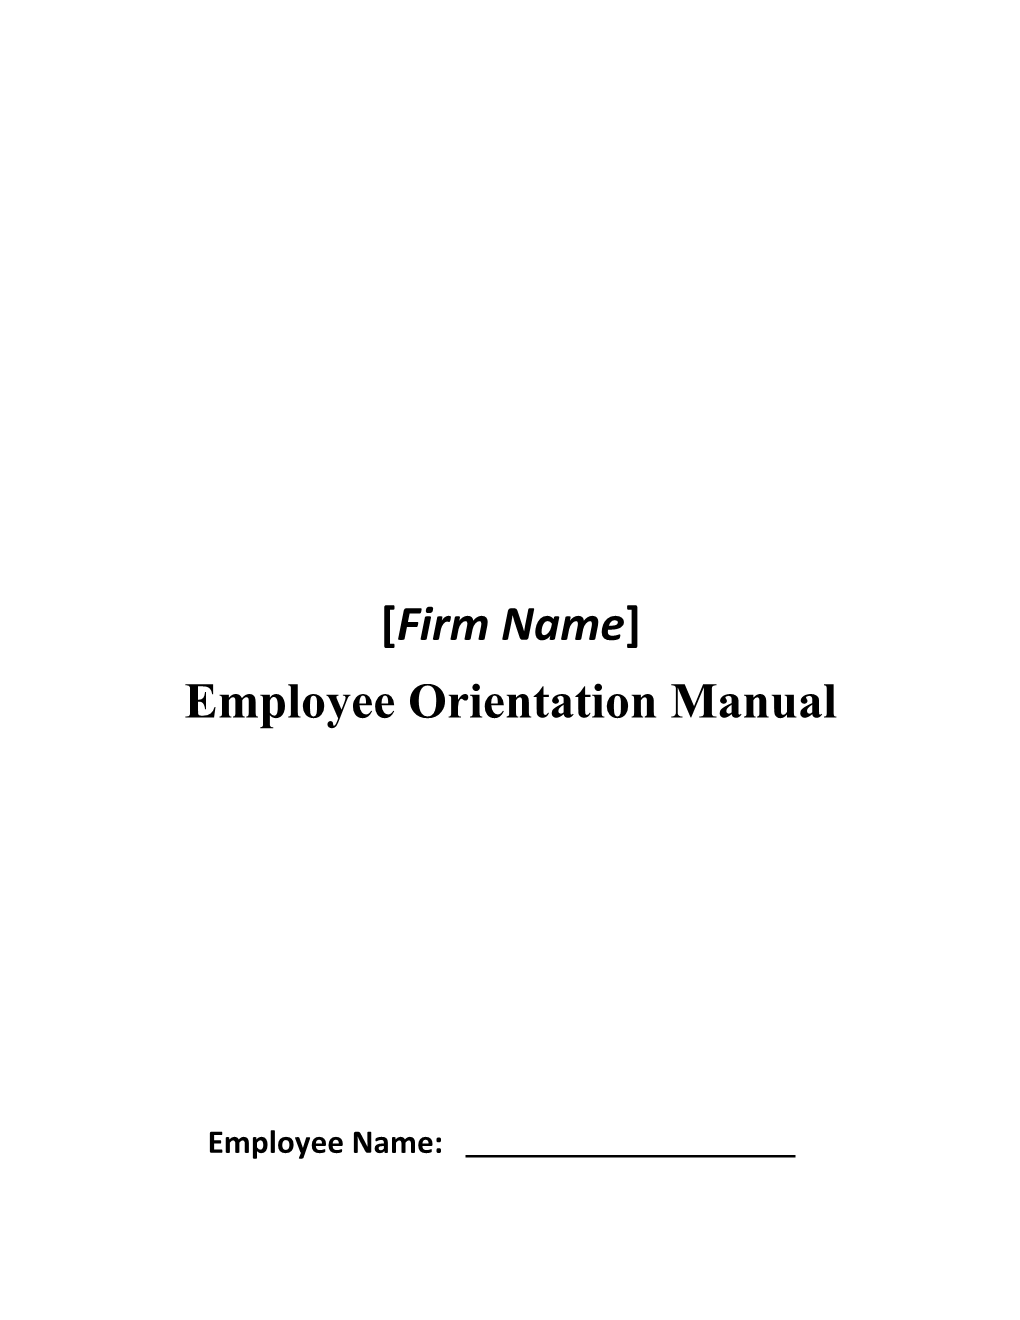 Employee Orientation Manual